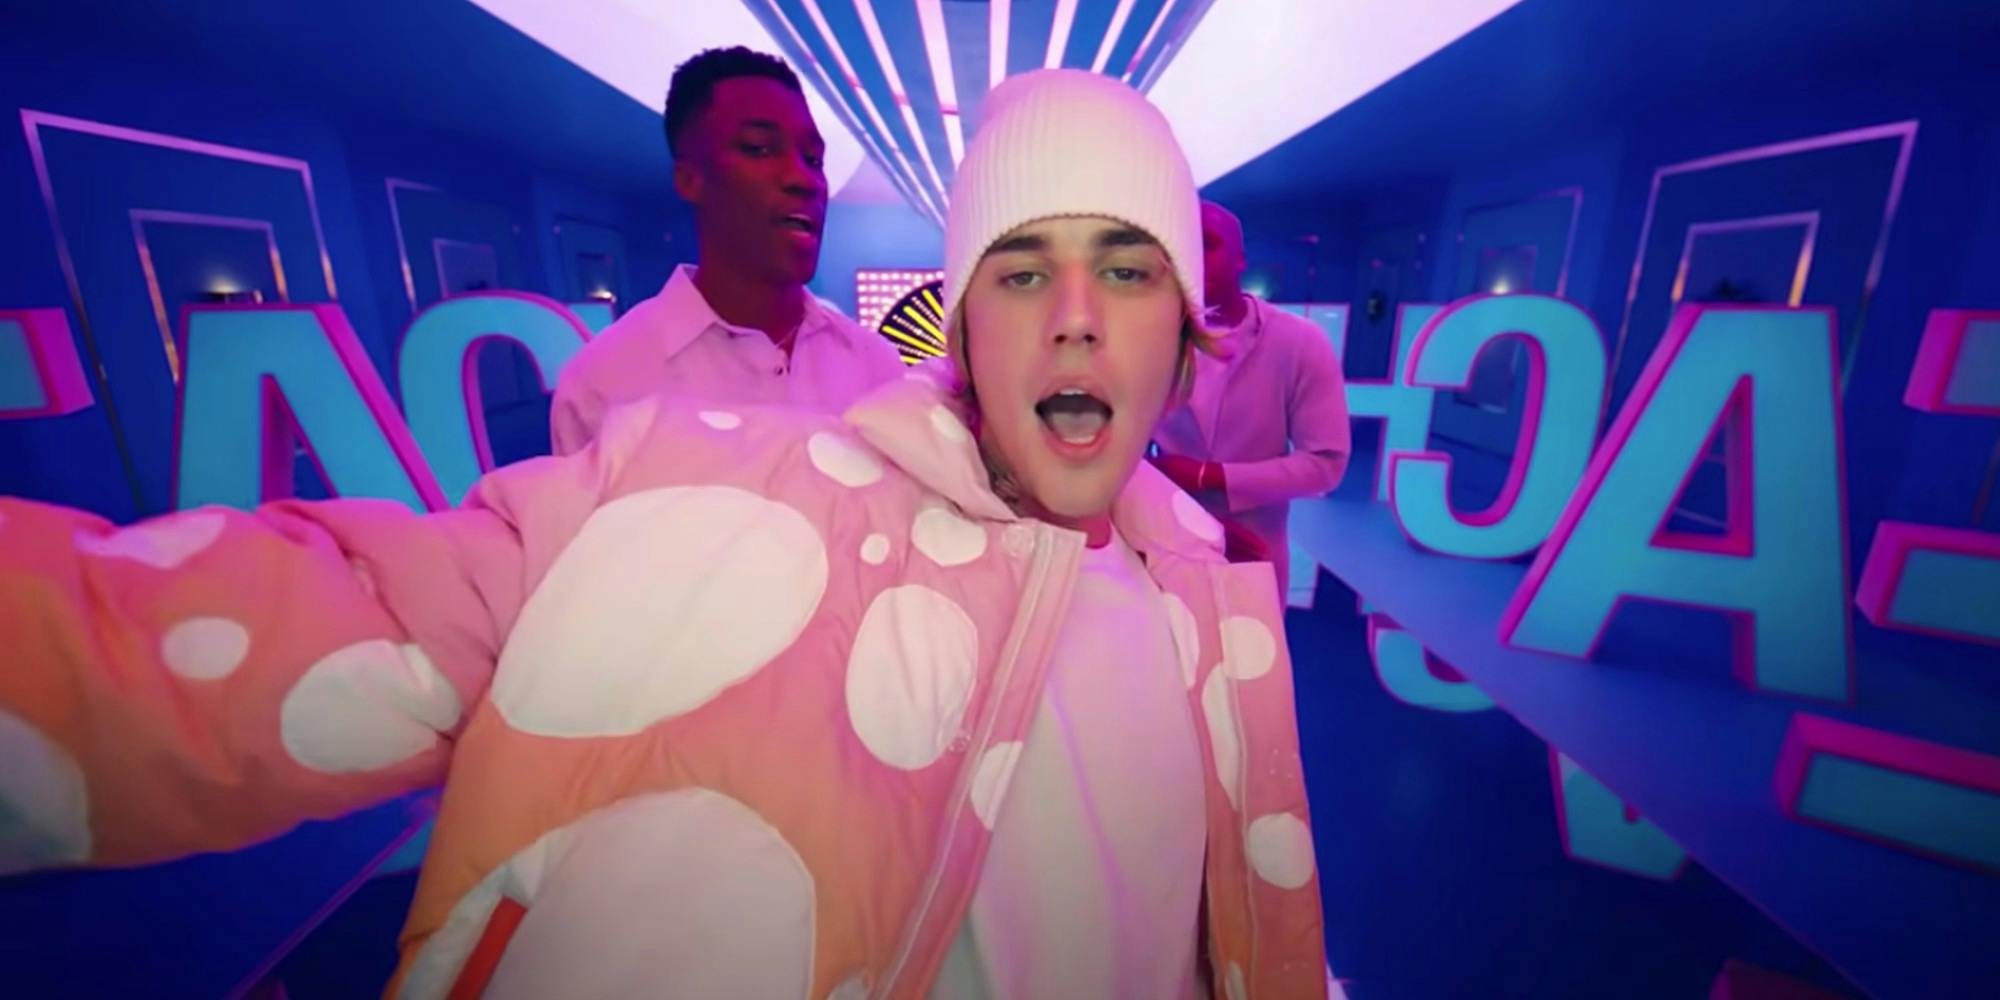 Justin Bieber singing in a music video